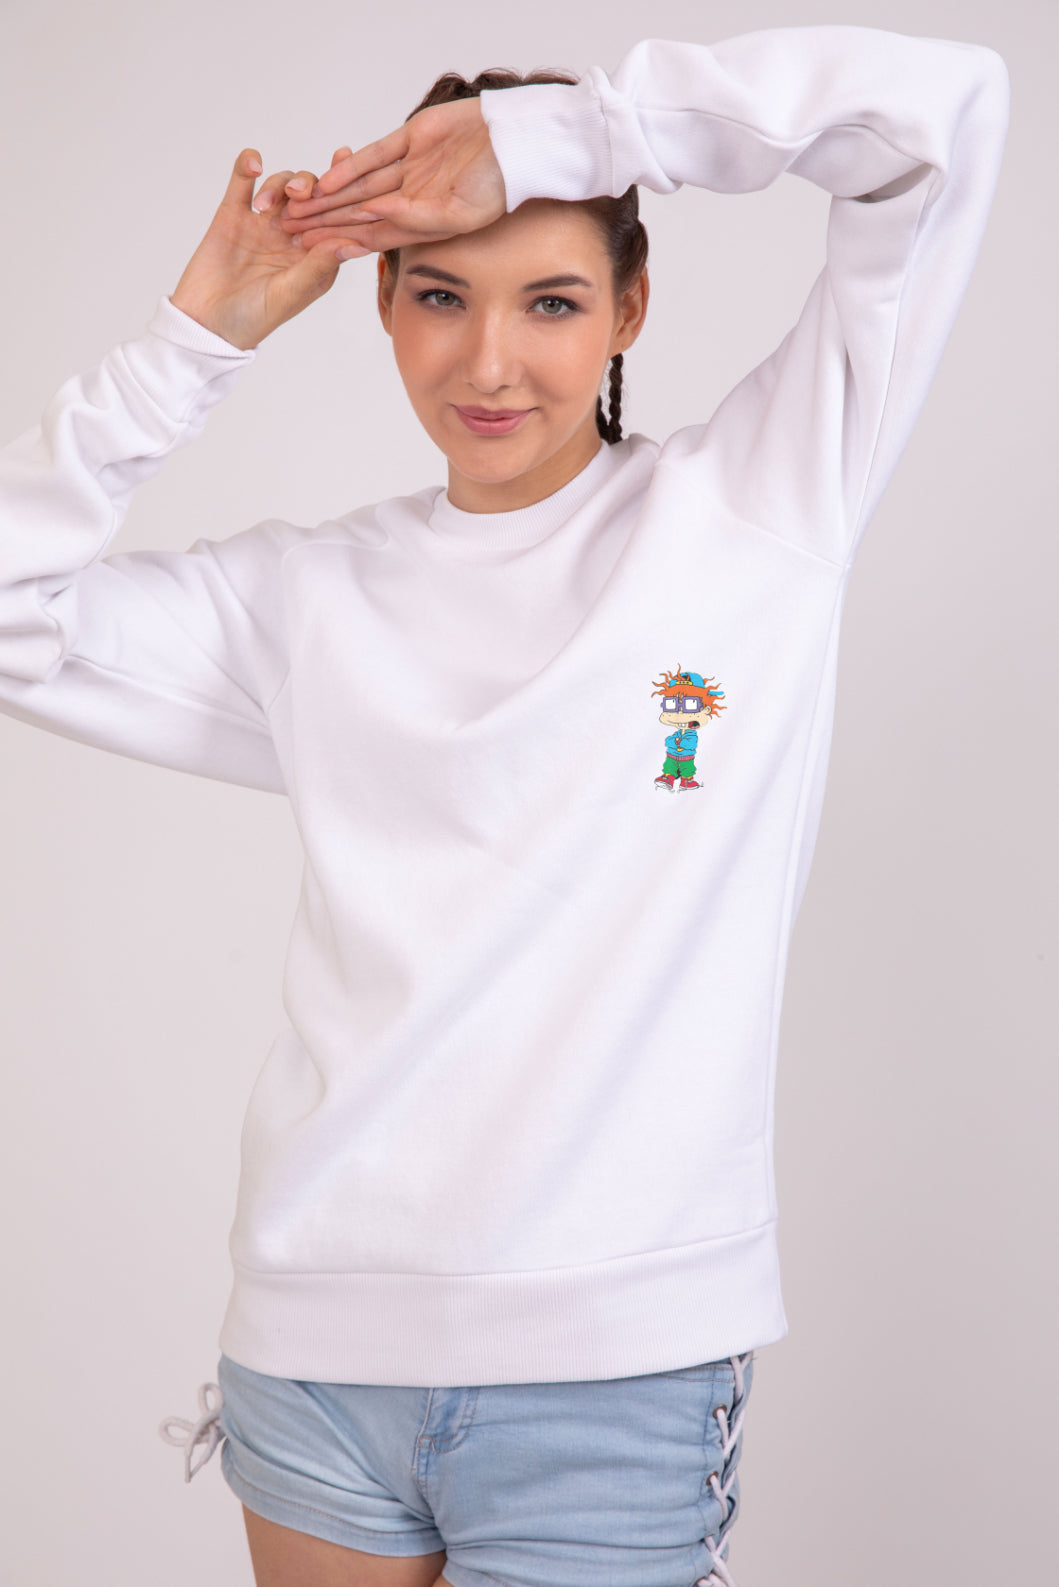 Chuckie Radiant White - Printed Sweatshirt